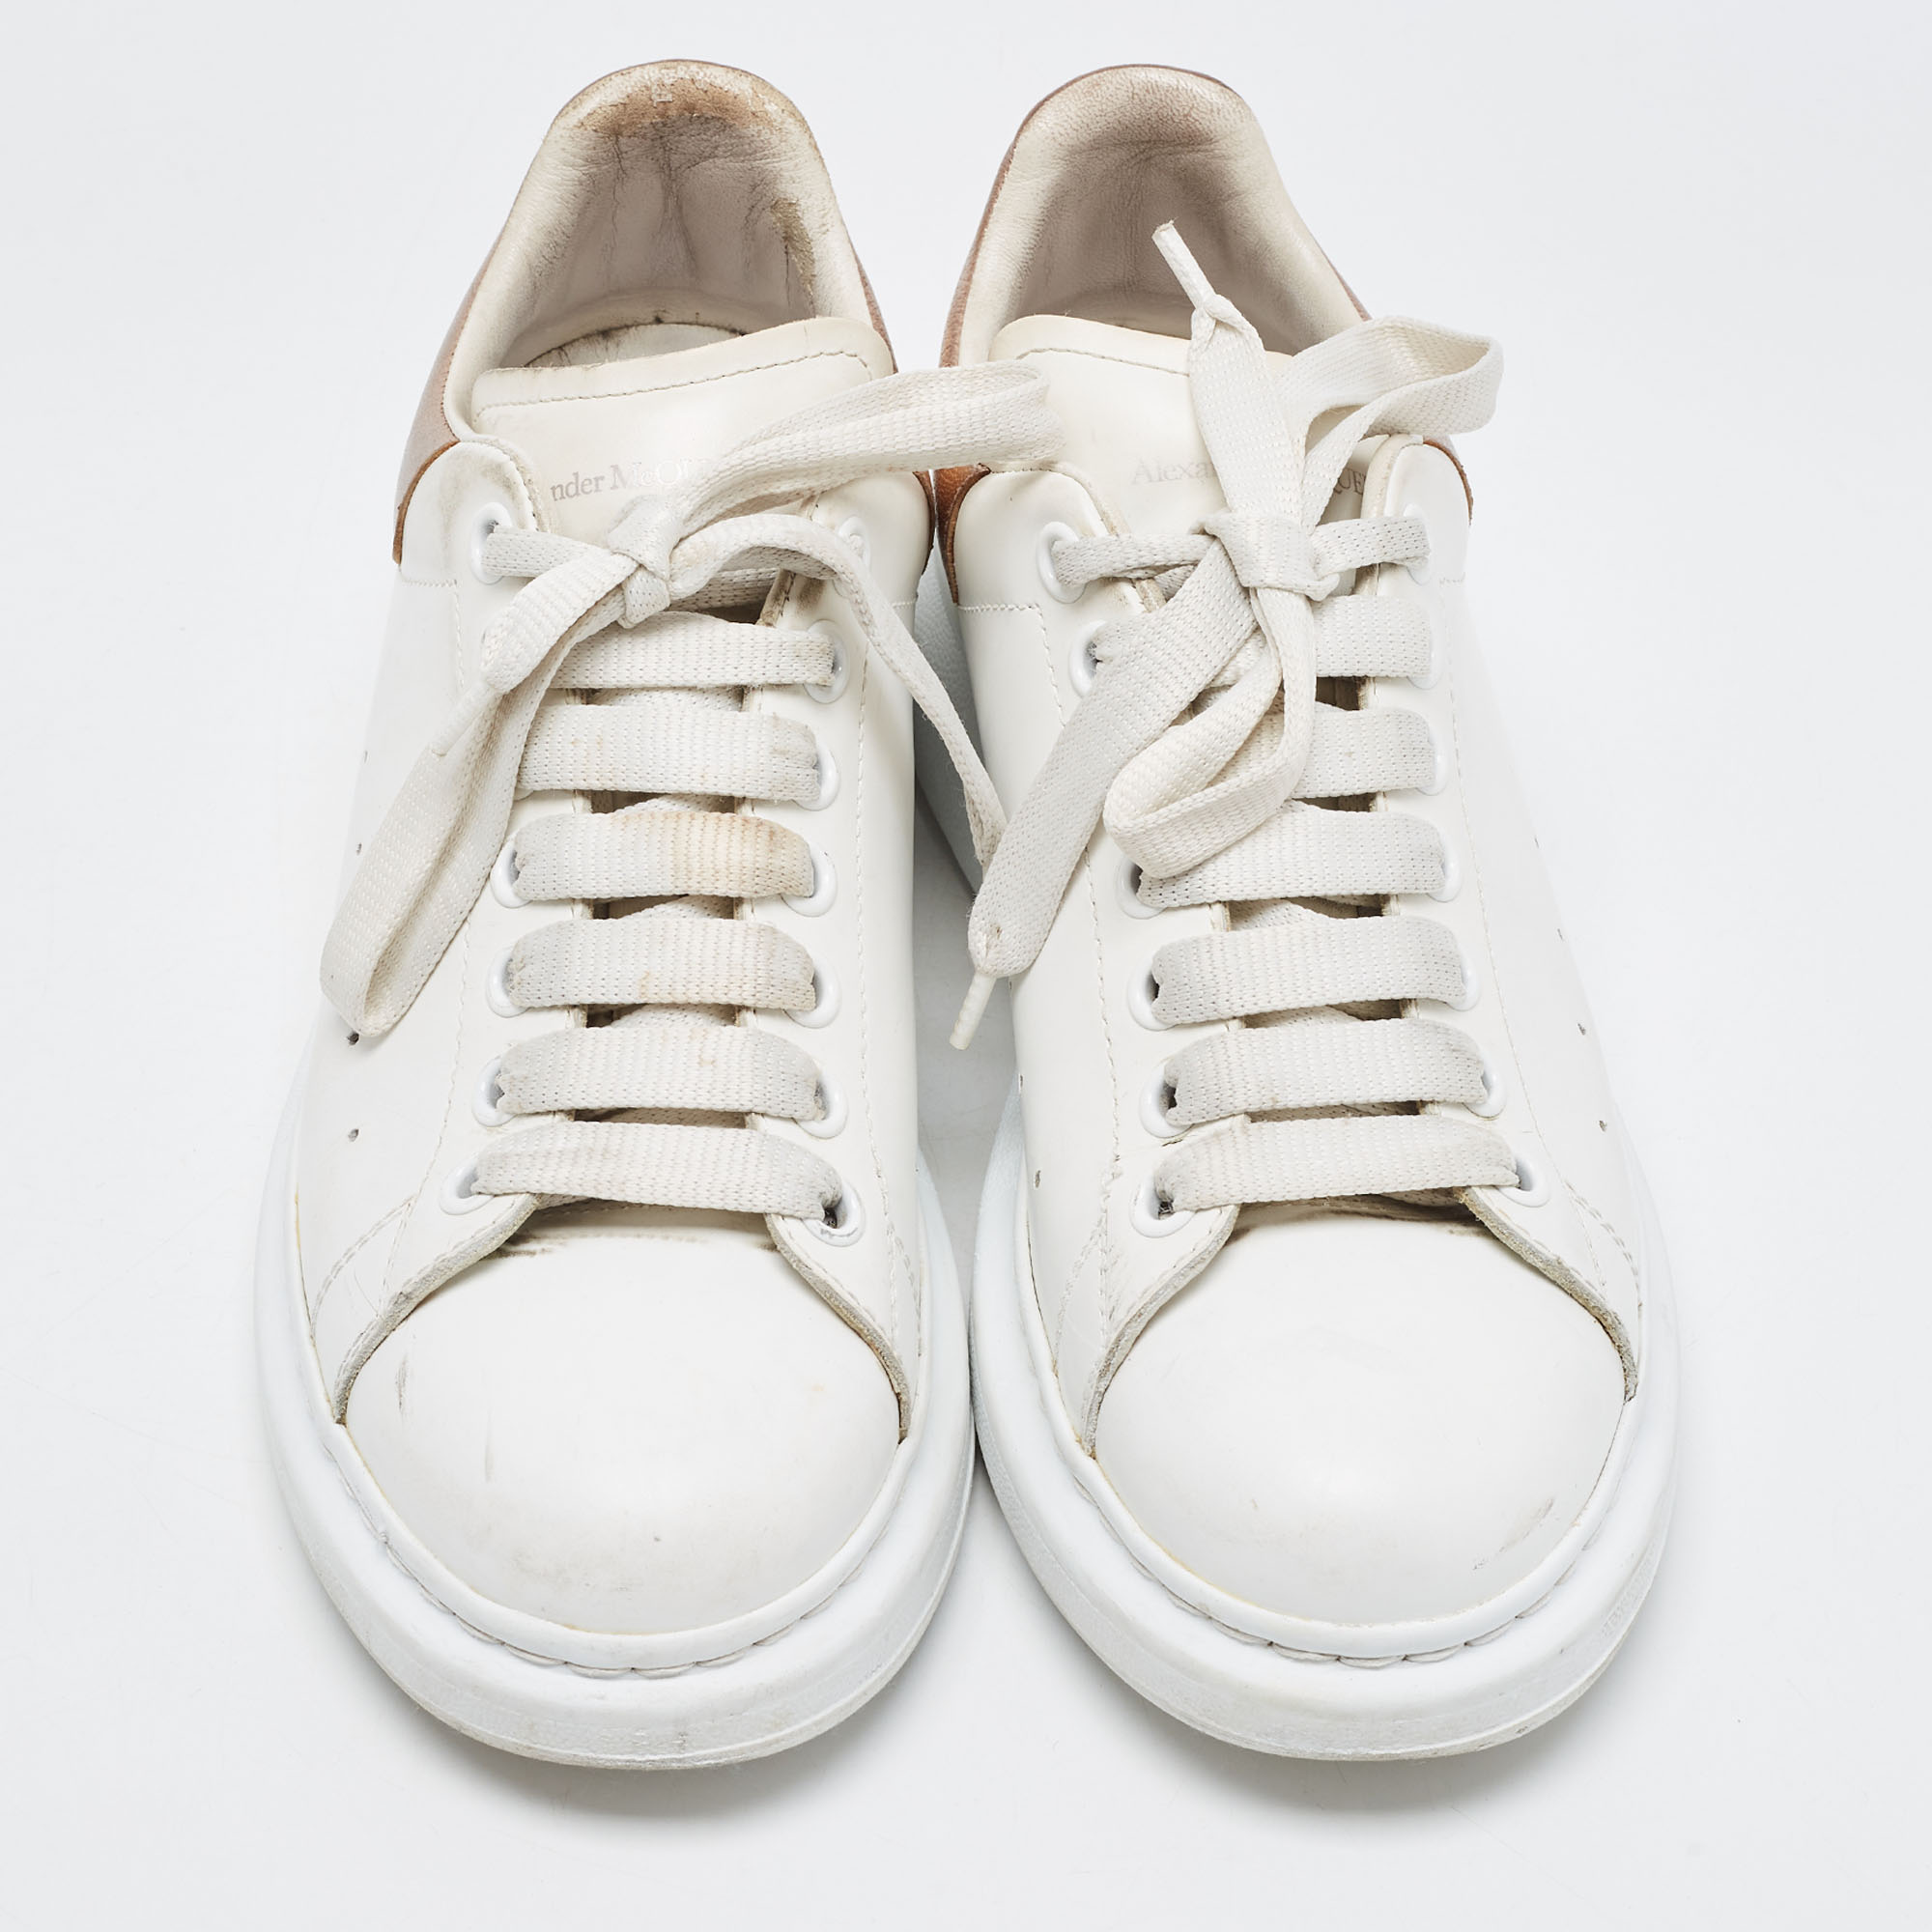 Alexander McQueen White/Metallic Leather Oversized Sneakers Size 39